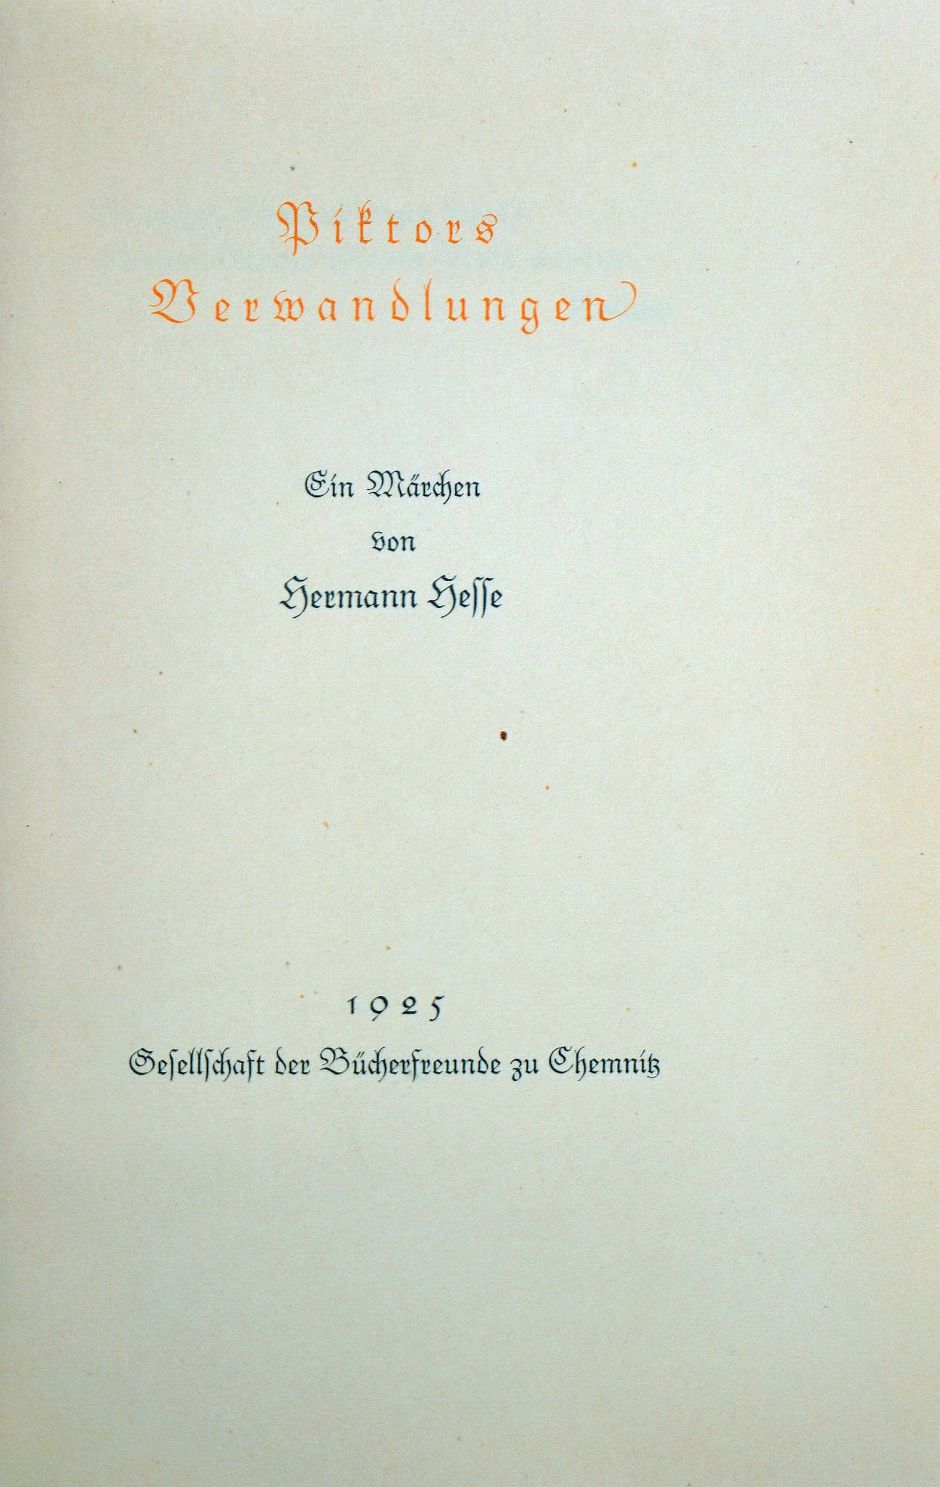 Lot 3178, Auction  115, Hesse, Hermann, Piktors Verwandlungen